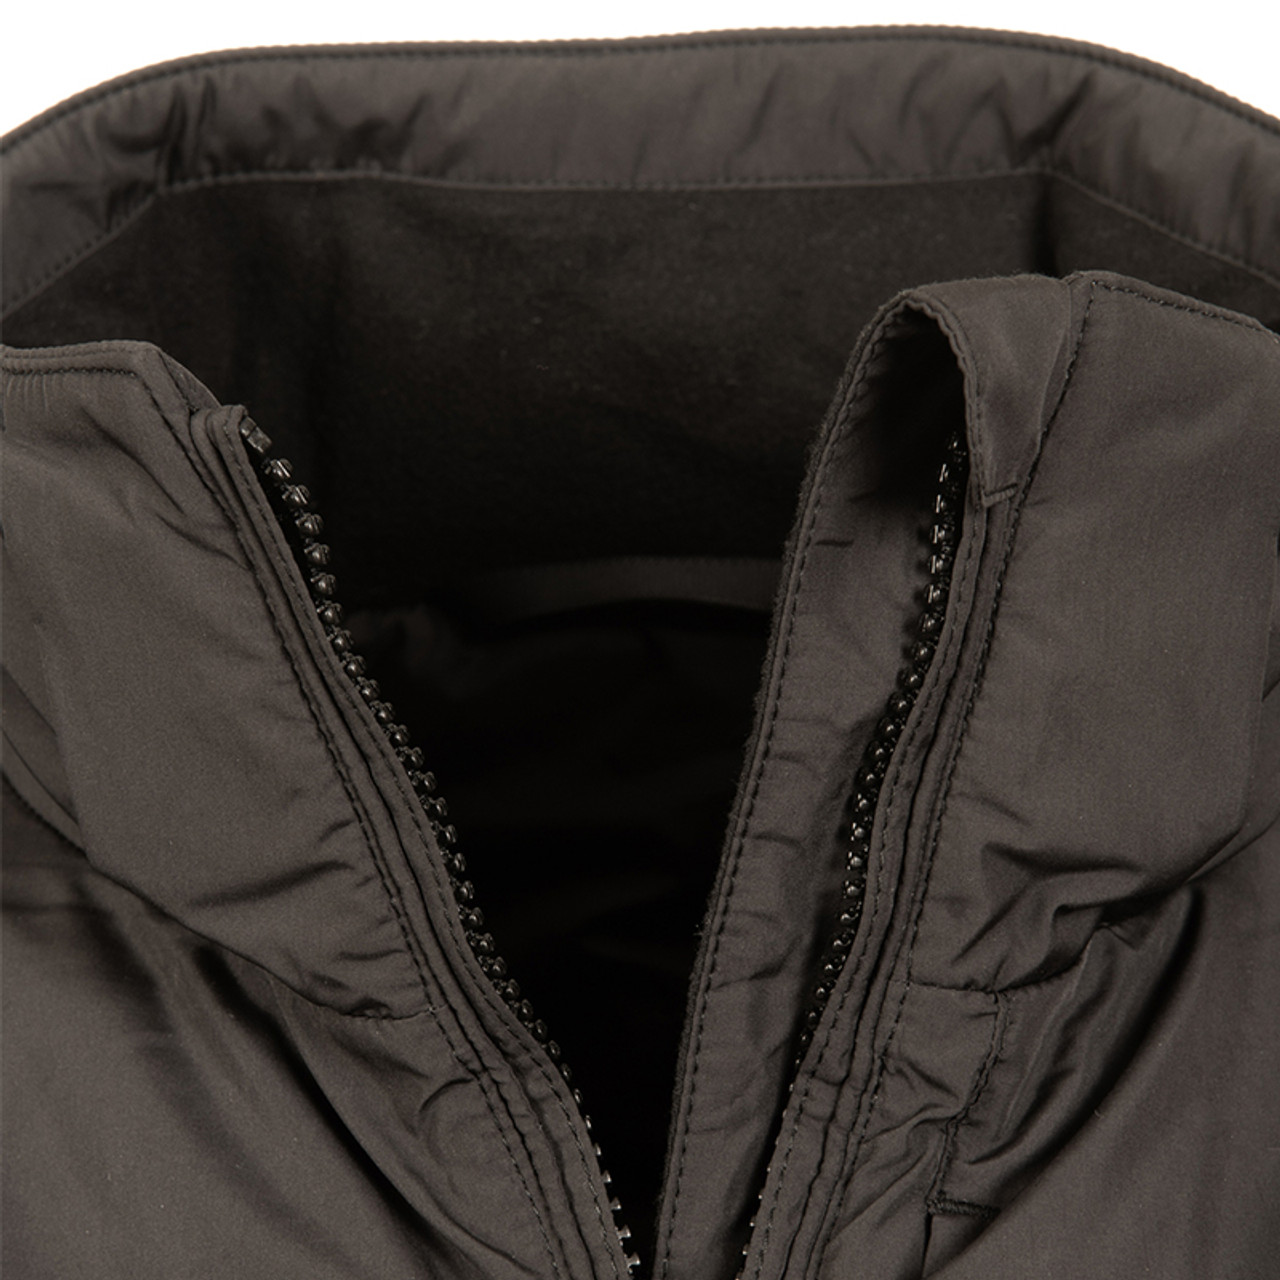 Snugpak Arrowhead Insulated Jacket